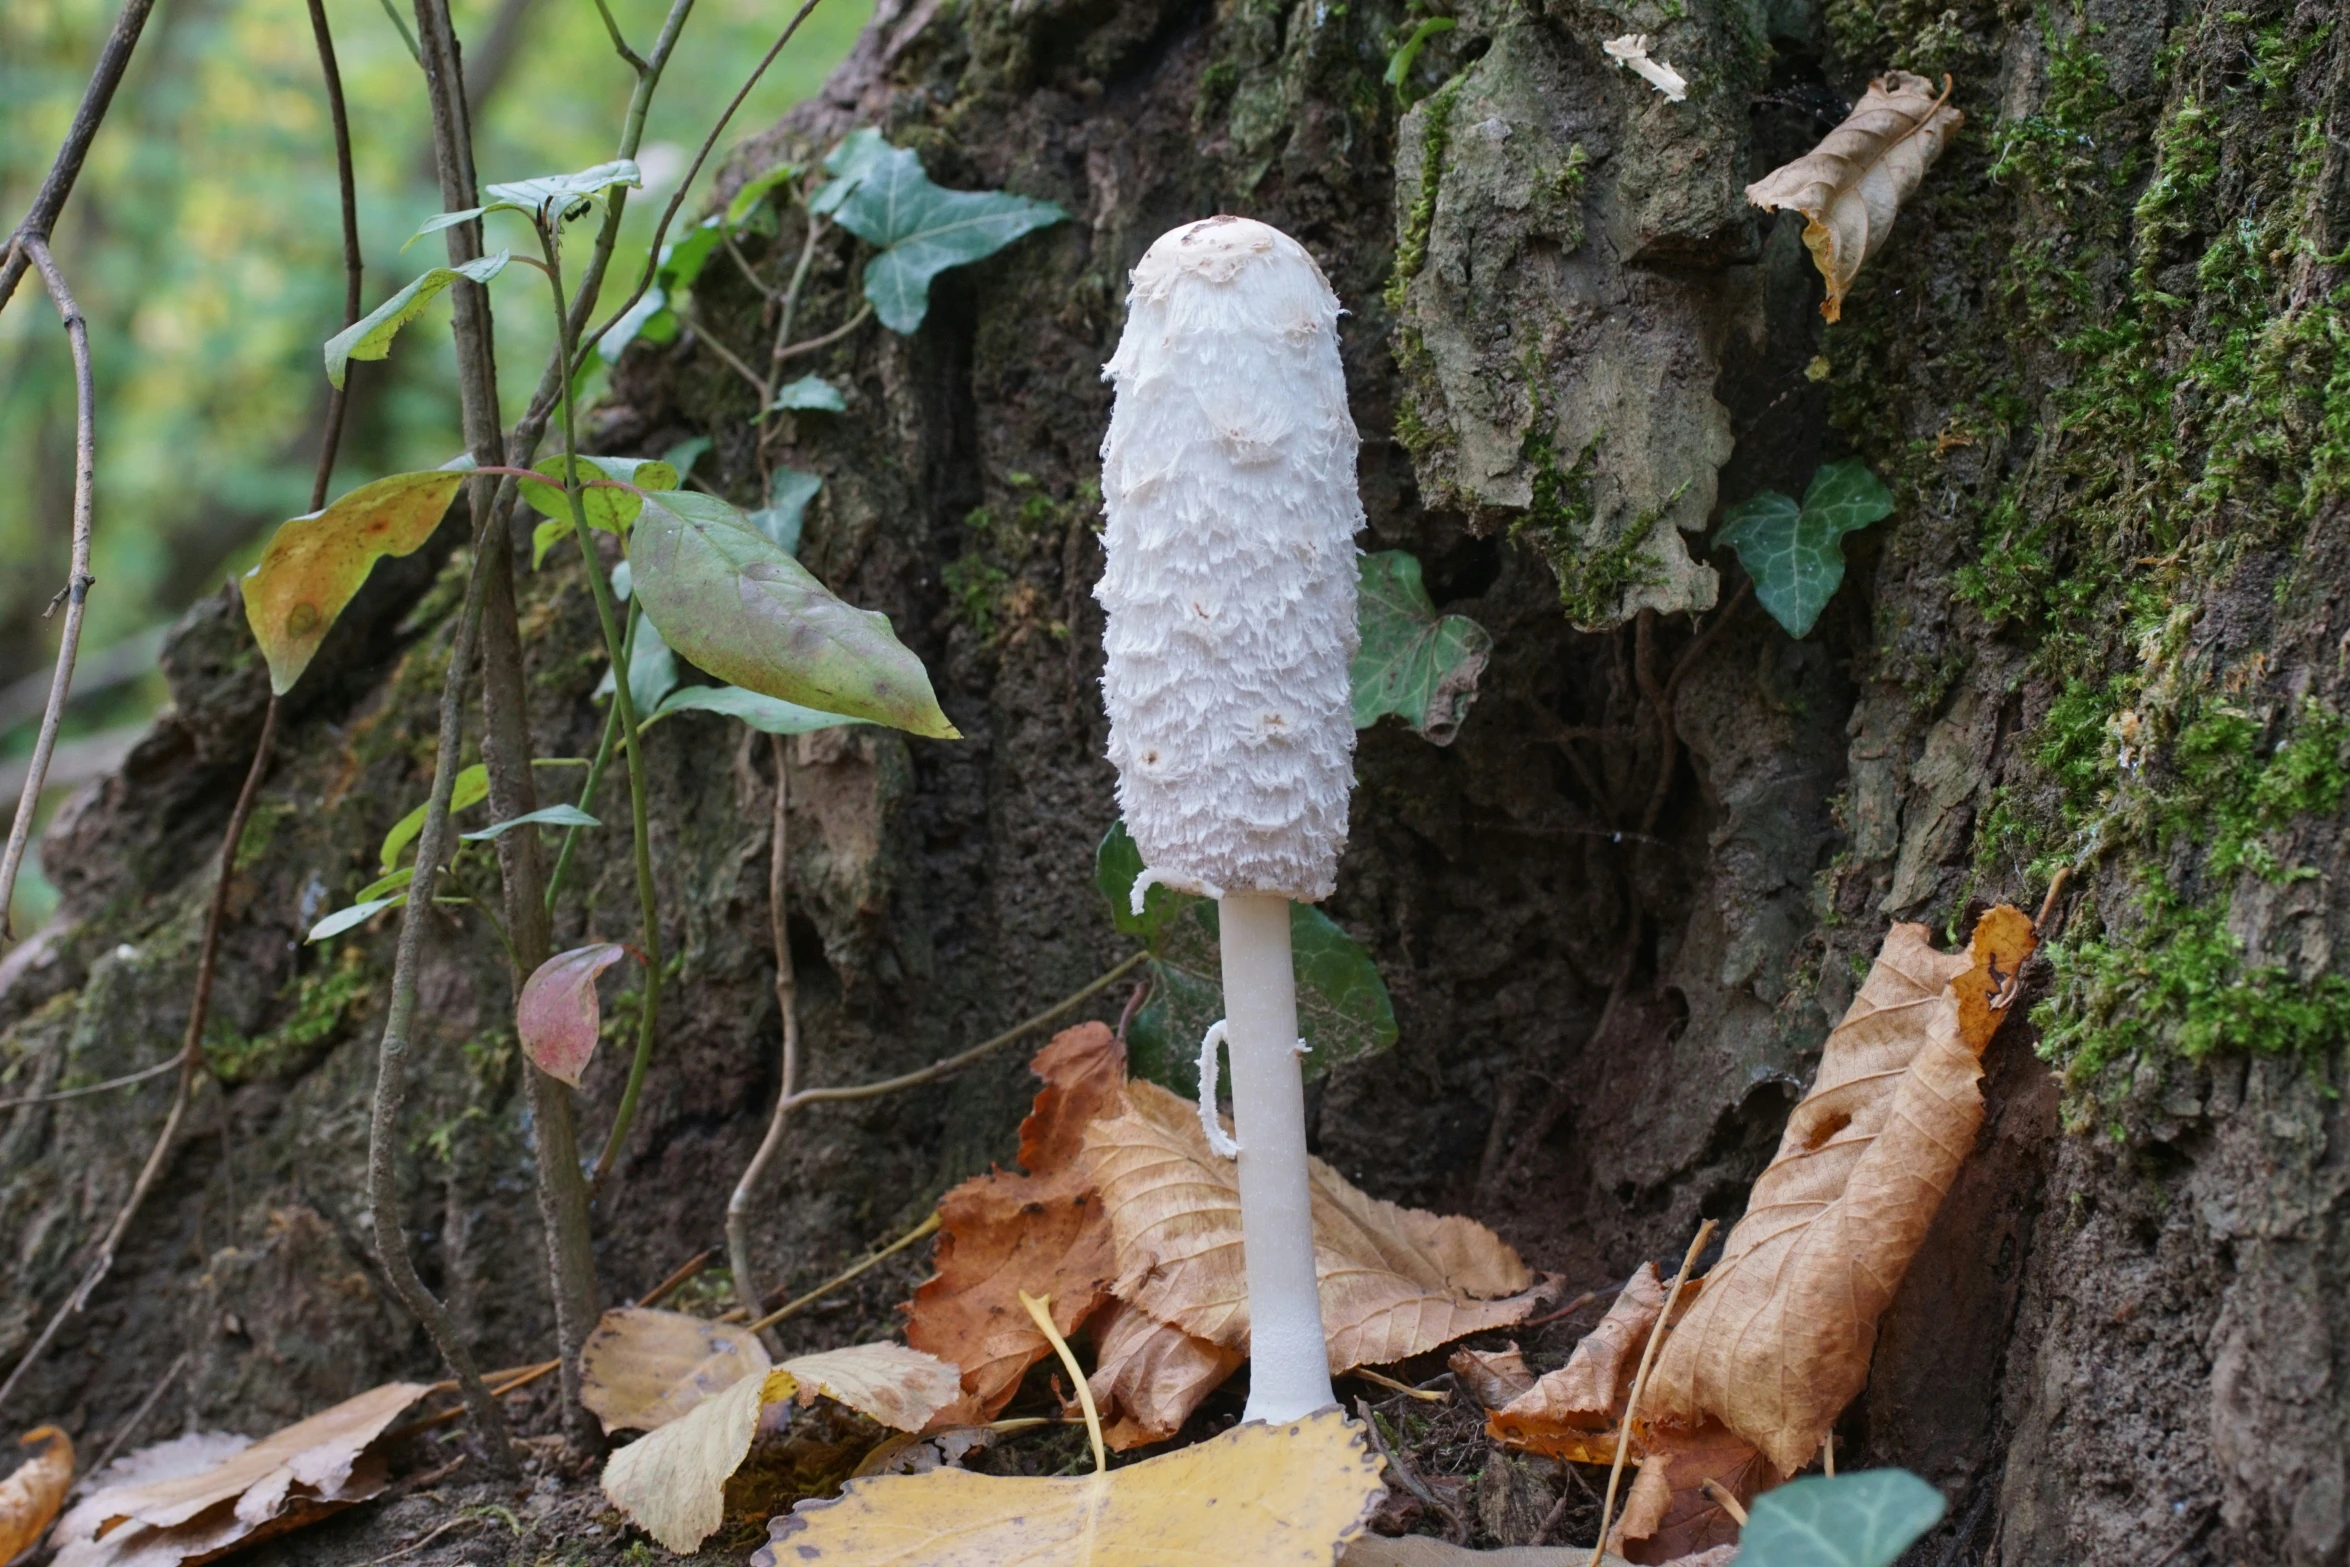 mushroom growing on the side of a tree